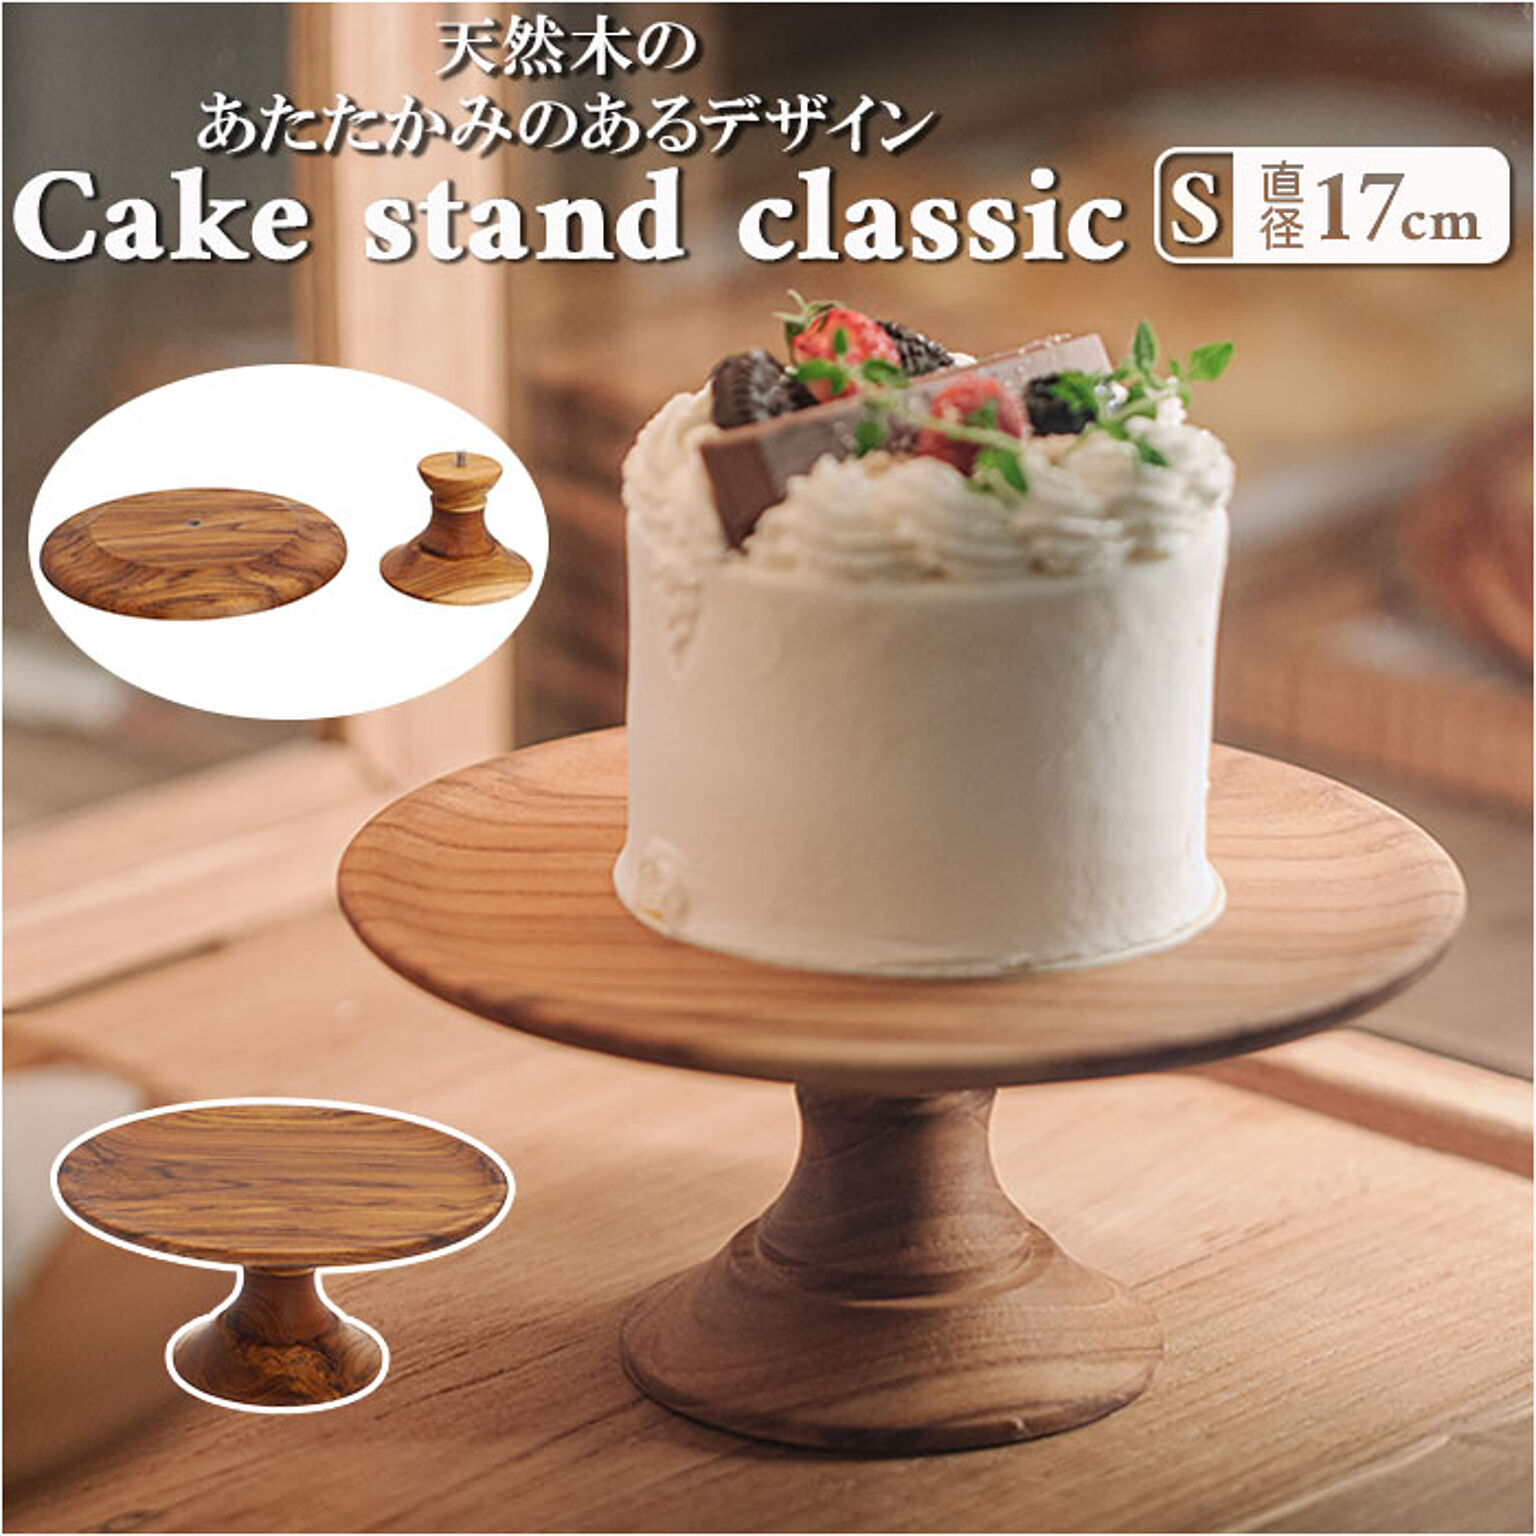 Cake stand classic S